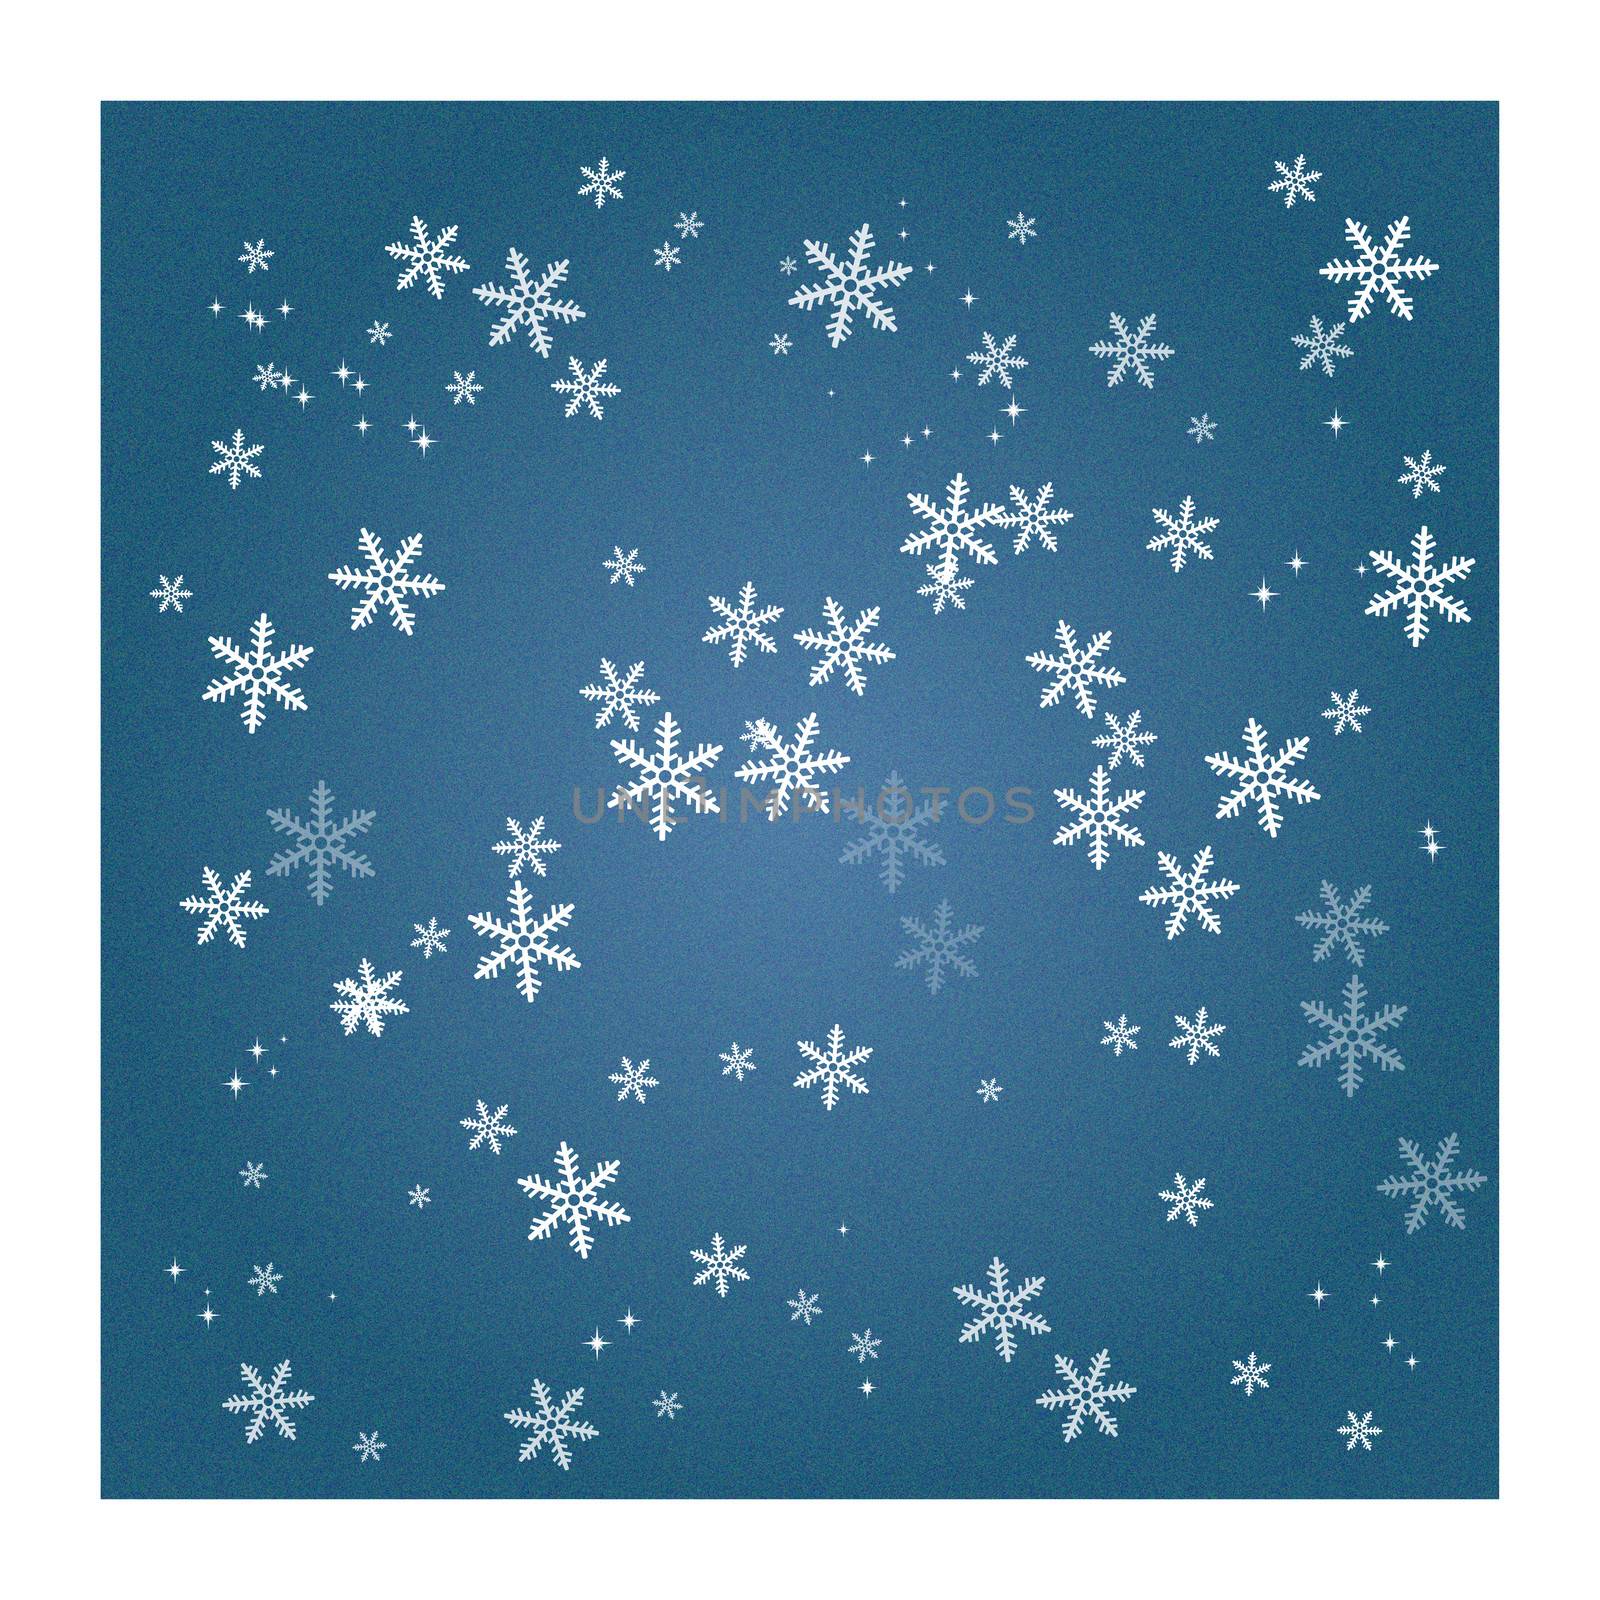 Holiday Season Snow Flake Card by Rasveta